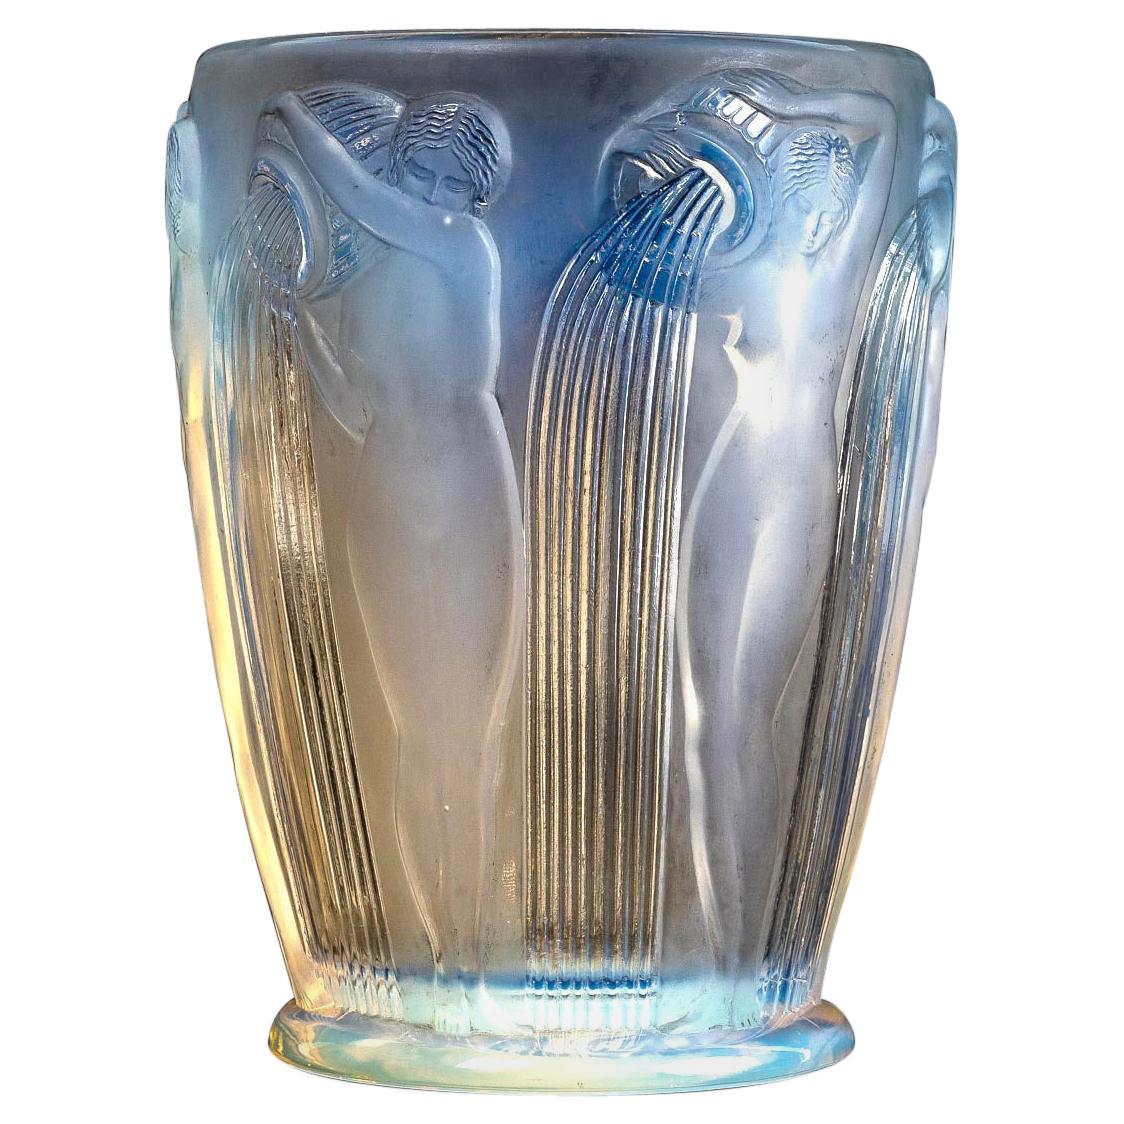 1926 Rene Lalique Danaïdes Vase in Opalescent Glass, Pouring Women